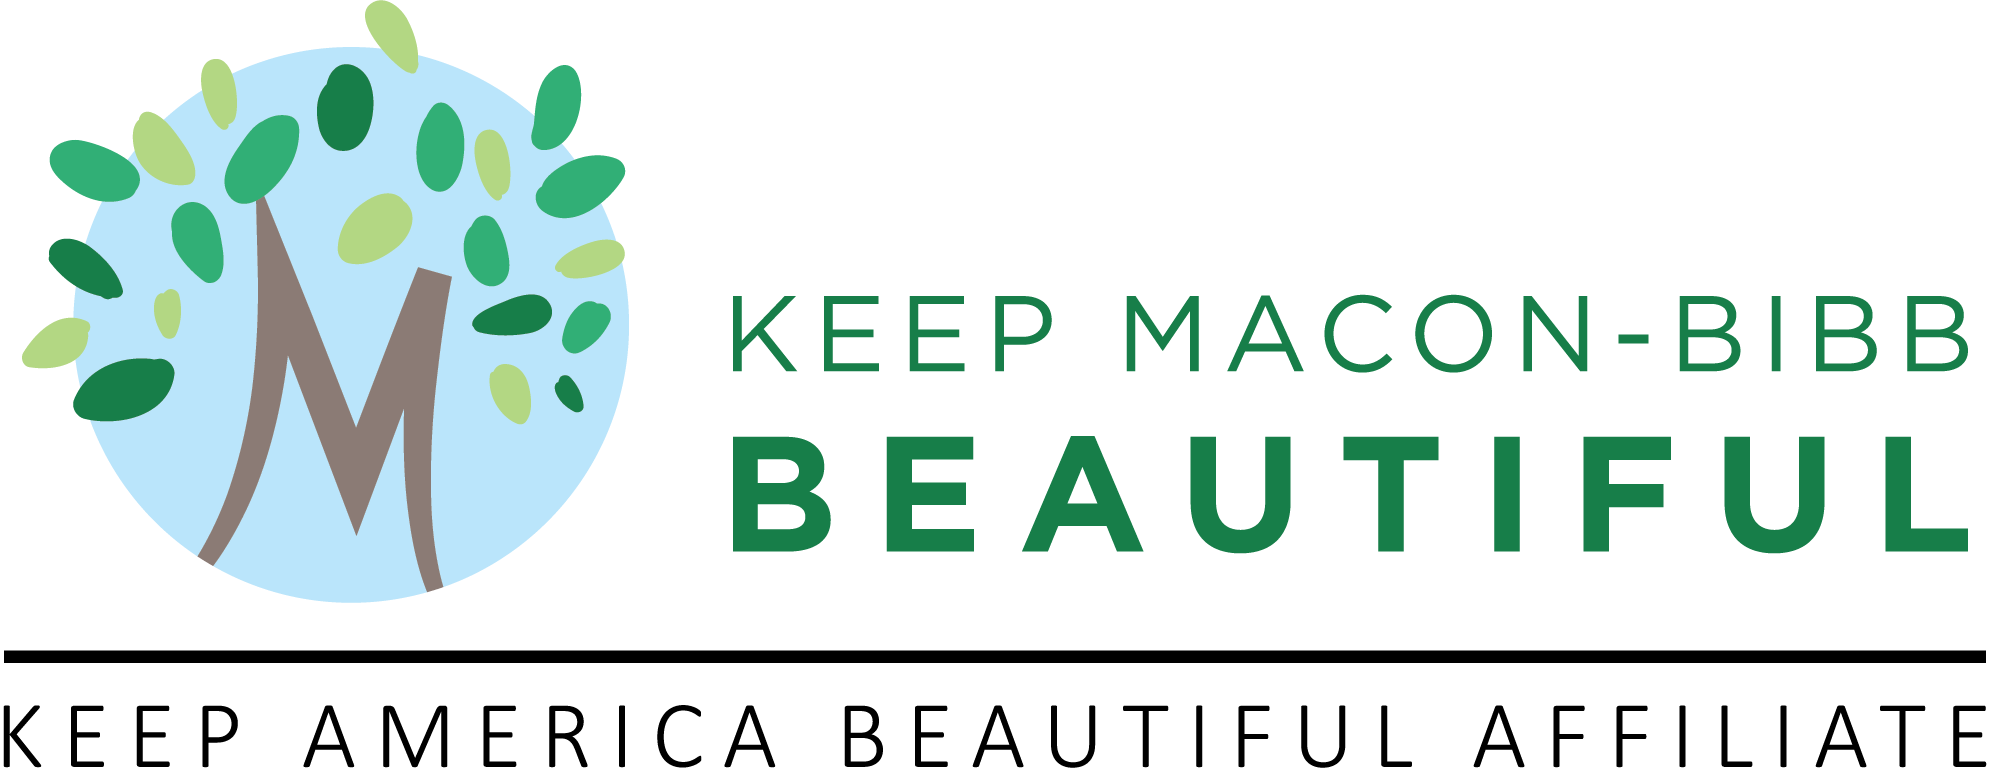 Keep Macon-Bibb Beautiful |